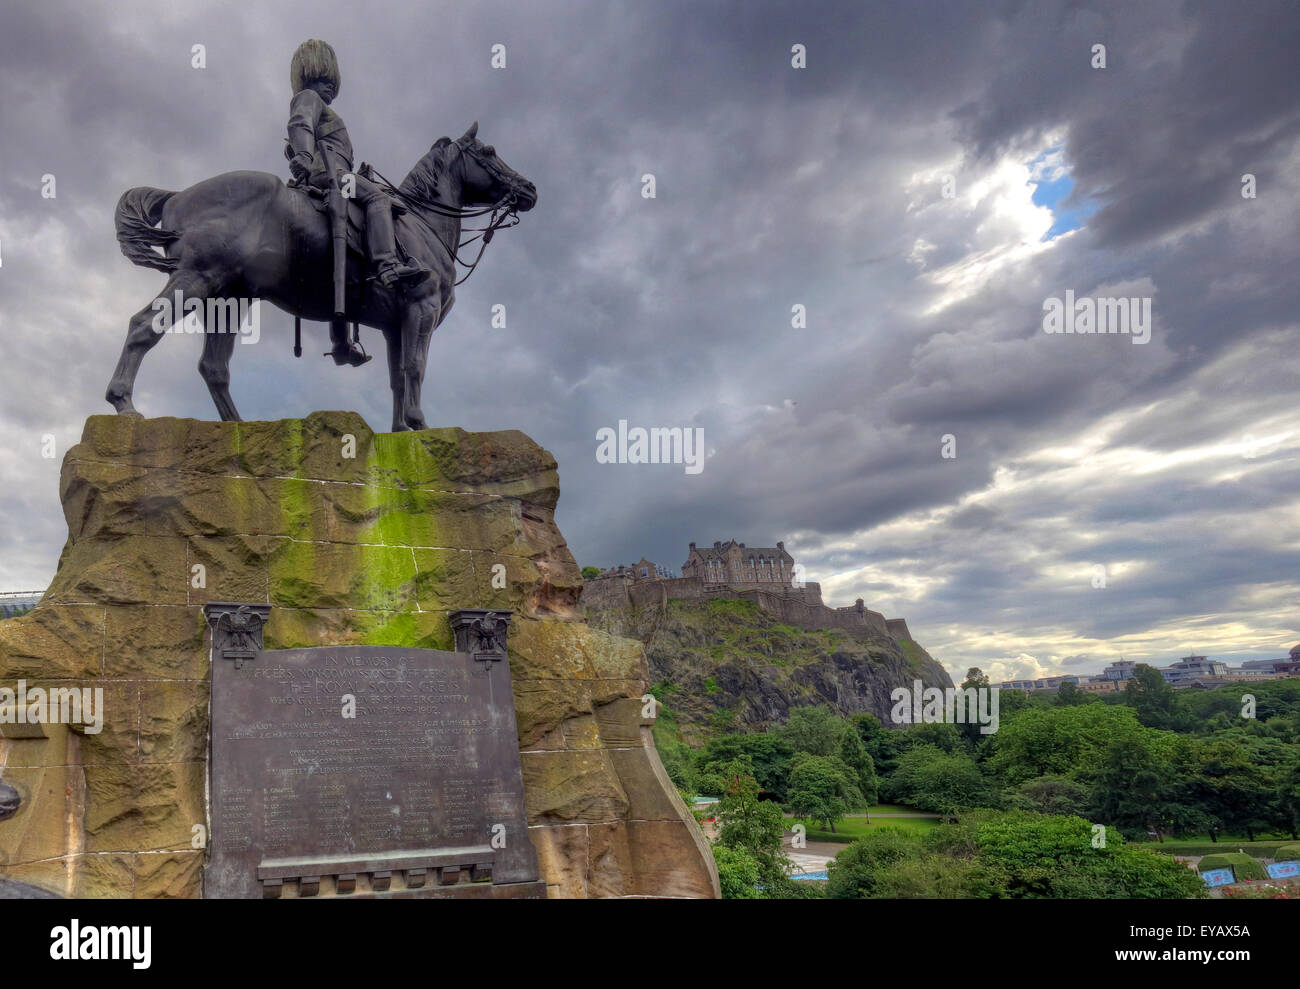 Statue/Plaque in memory of the Royal Scots Greys, Princes St, Edinburgh, Scotland, UK Stock Photo